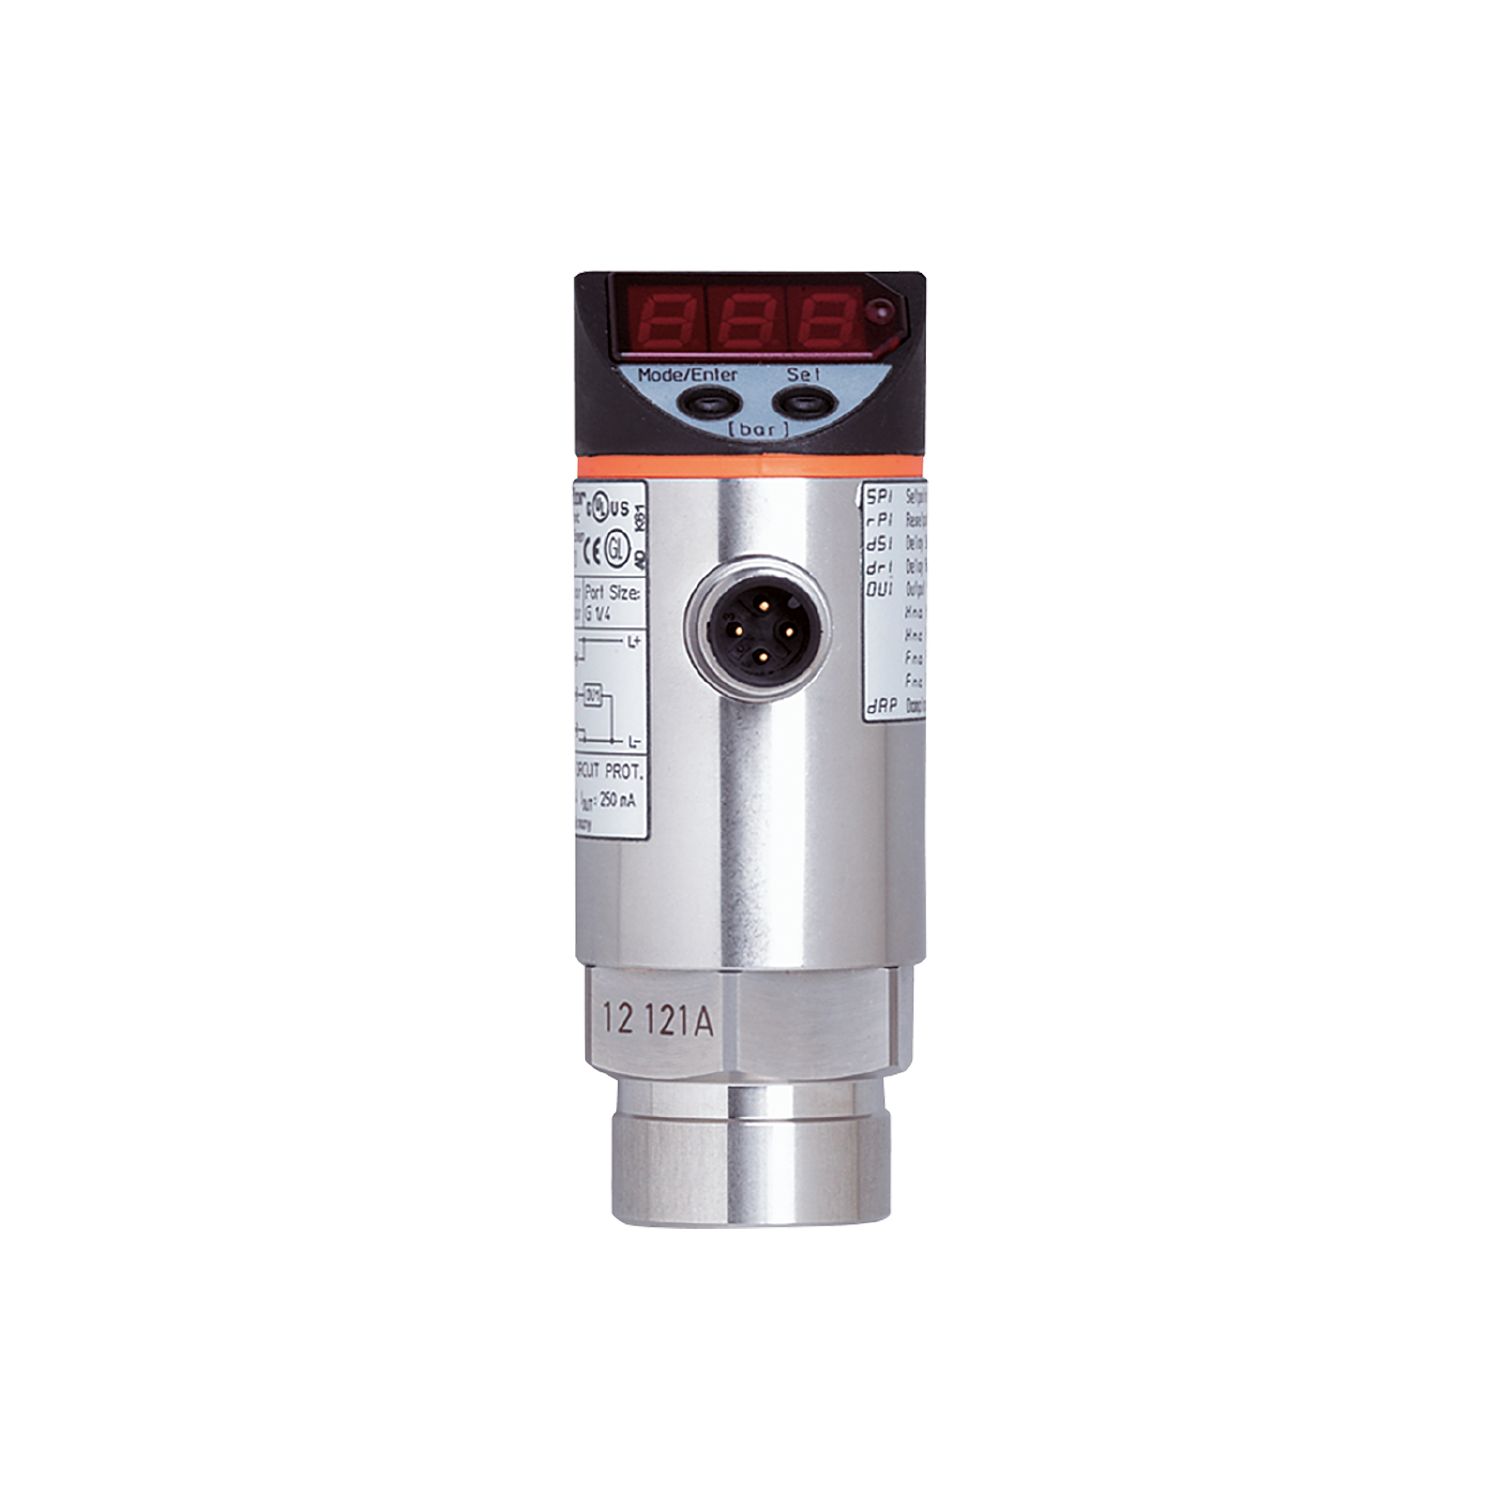 PE3006 - Pressure sensor with display - ifm